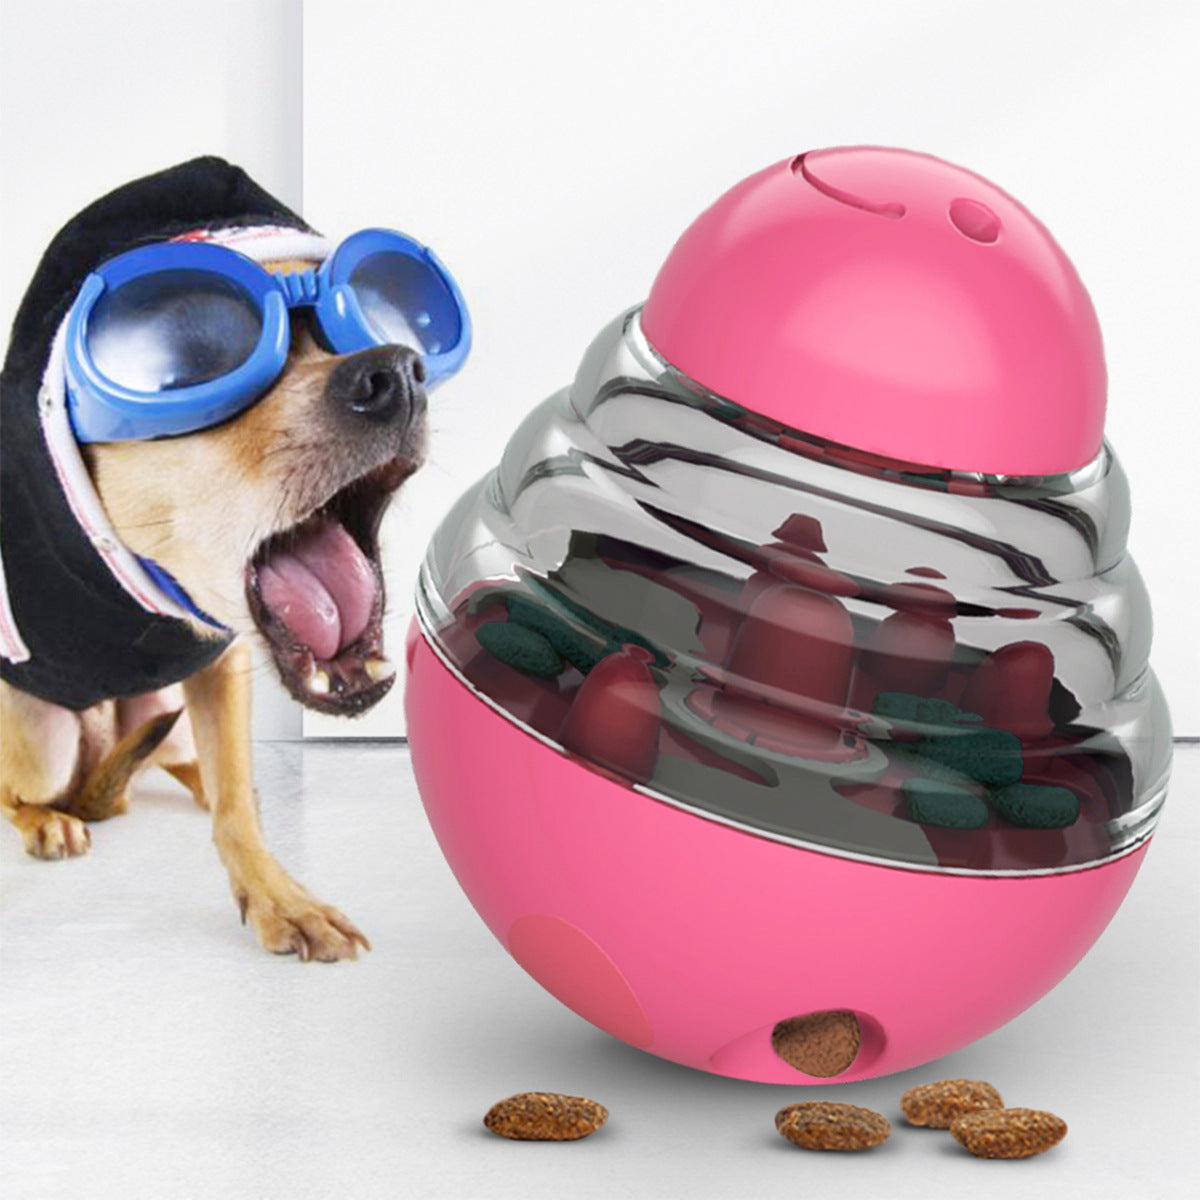 Leakage Food Feeder Tumbler Ball Balance Car Dog Toy